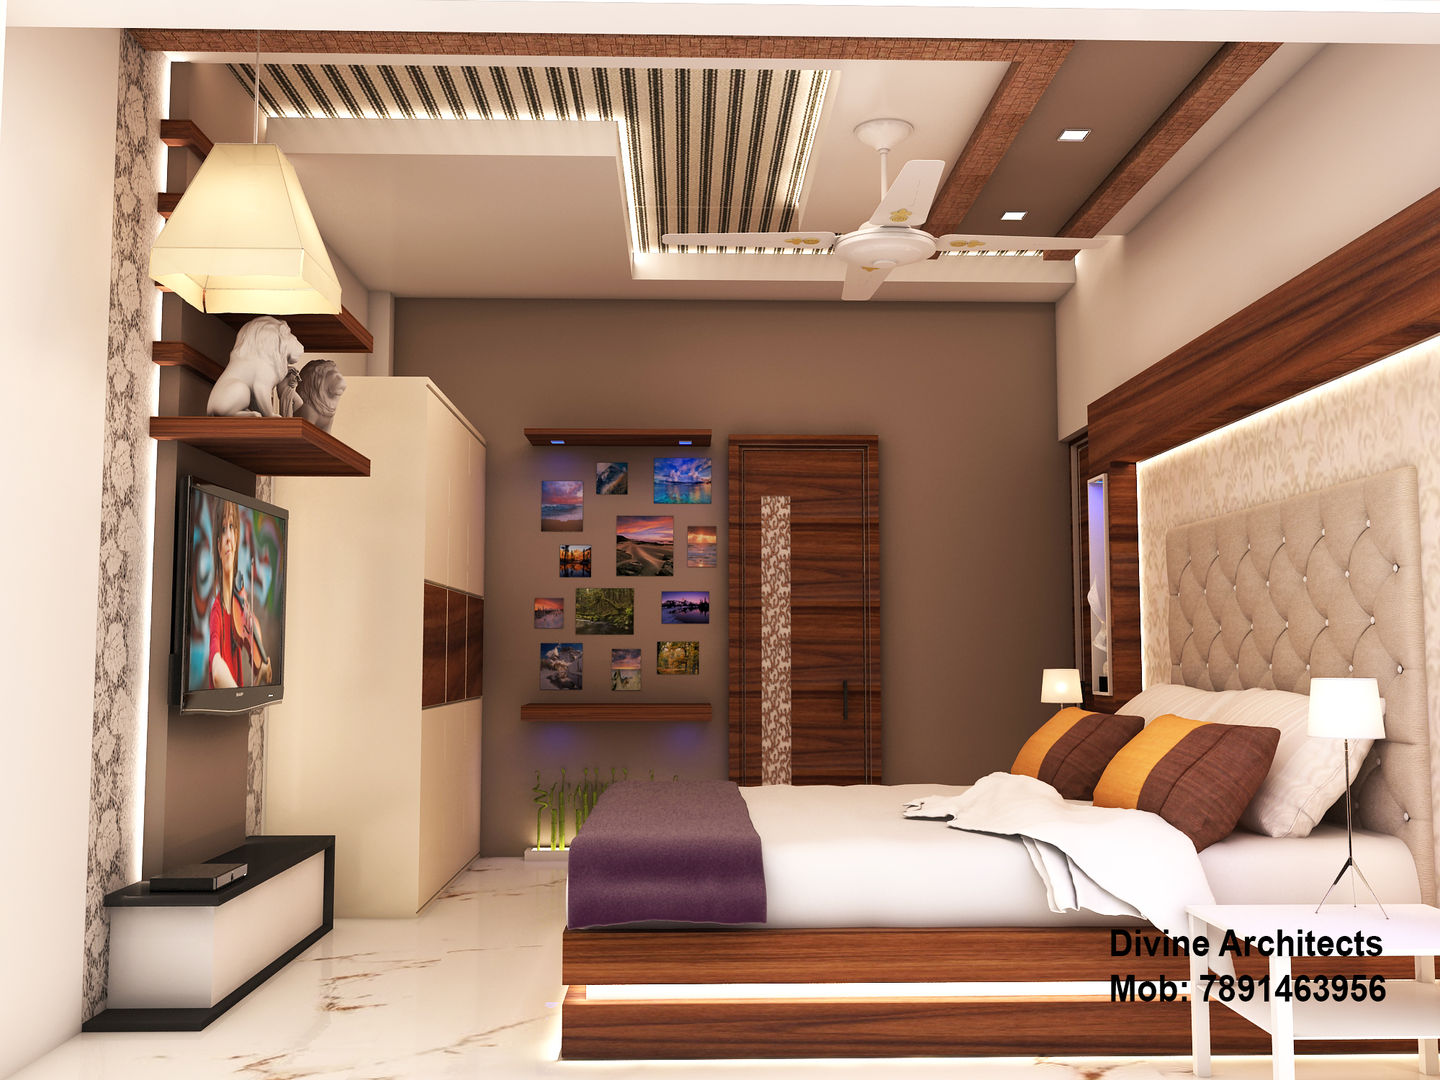 Son_ s bed room interior design for mr. Ramavtar Khunteta jalmahal site joraver Singh gate govind nagar east Jaipur, divine architects divine architects Quartos modernos